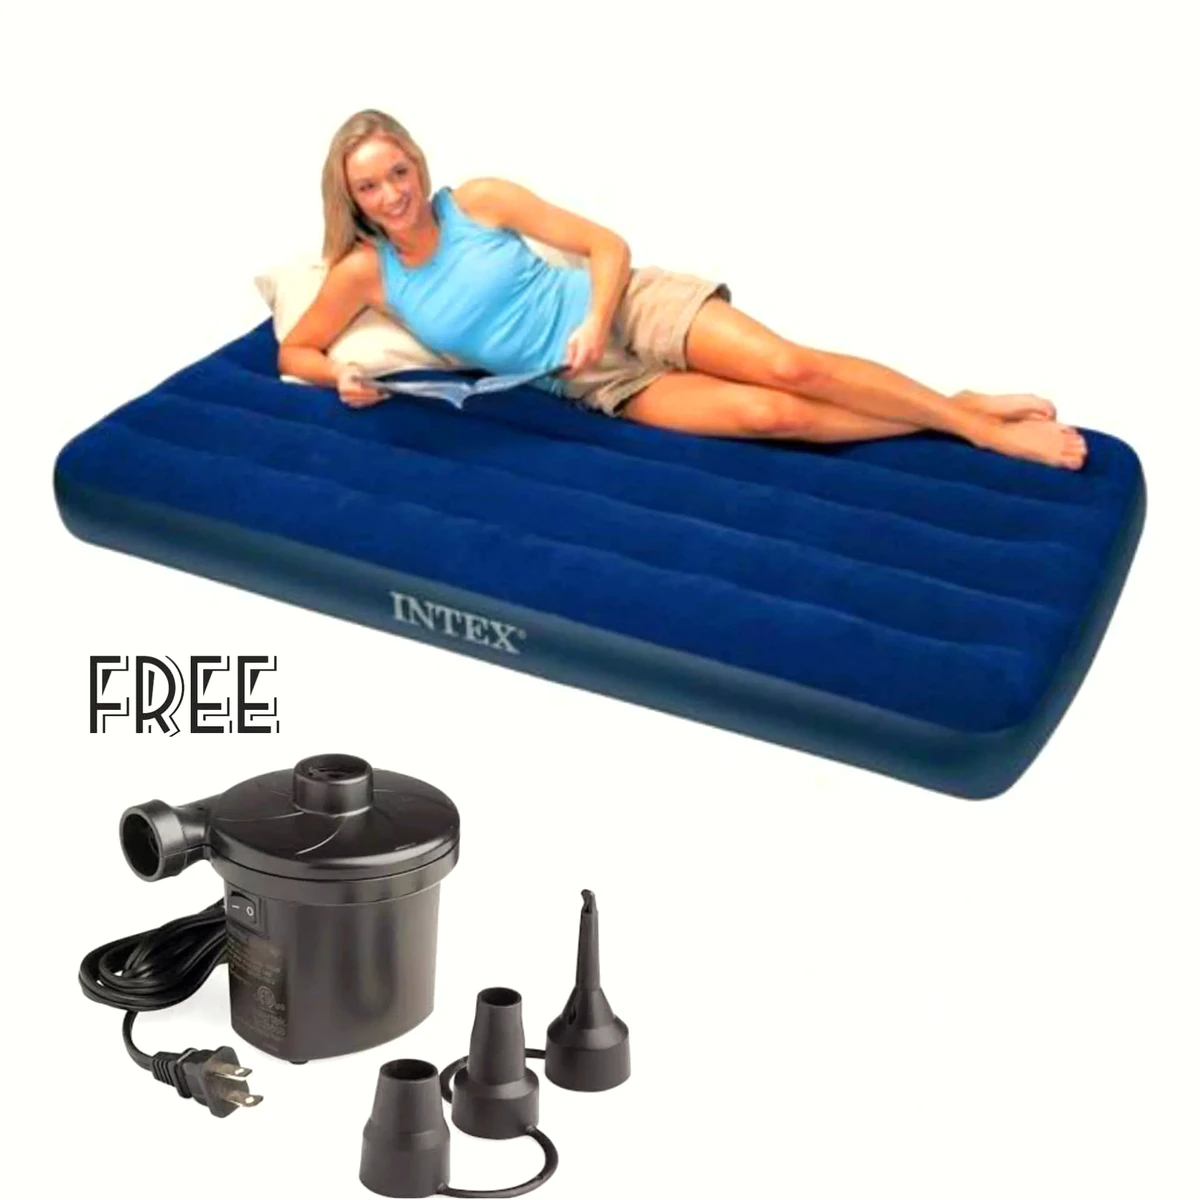 Portable INTEX Air bed & Air Mattress with Free Electric Pumper